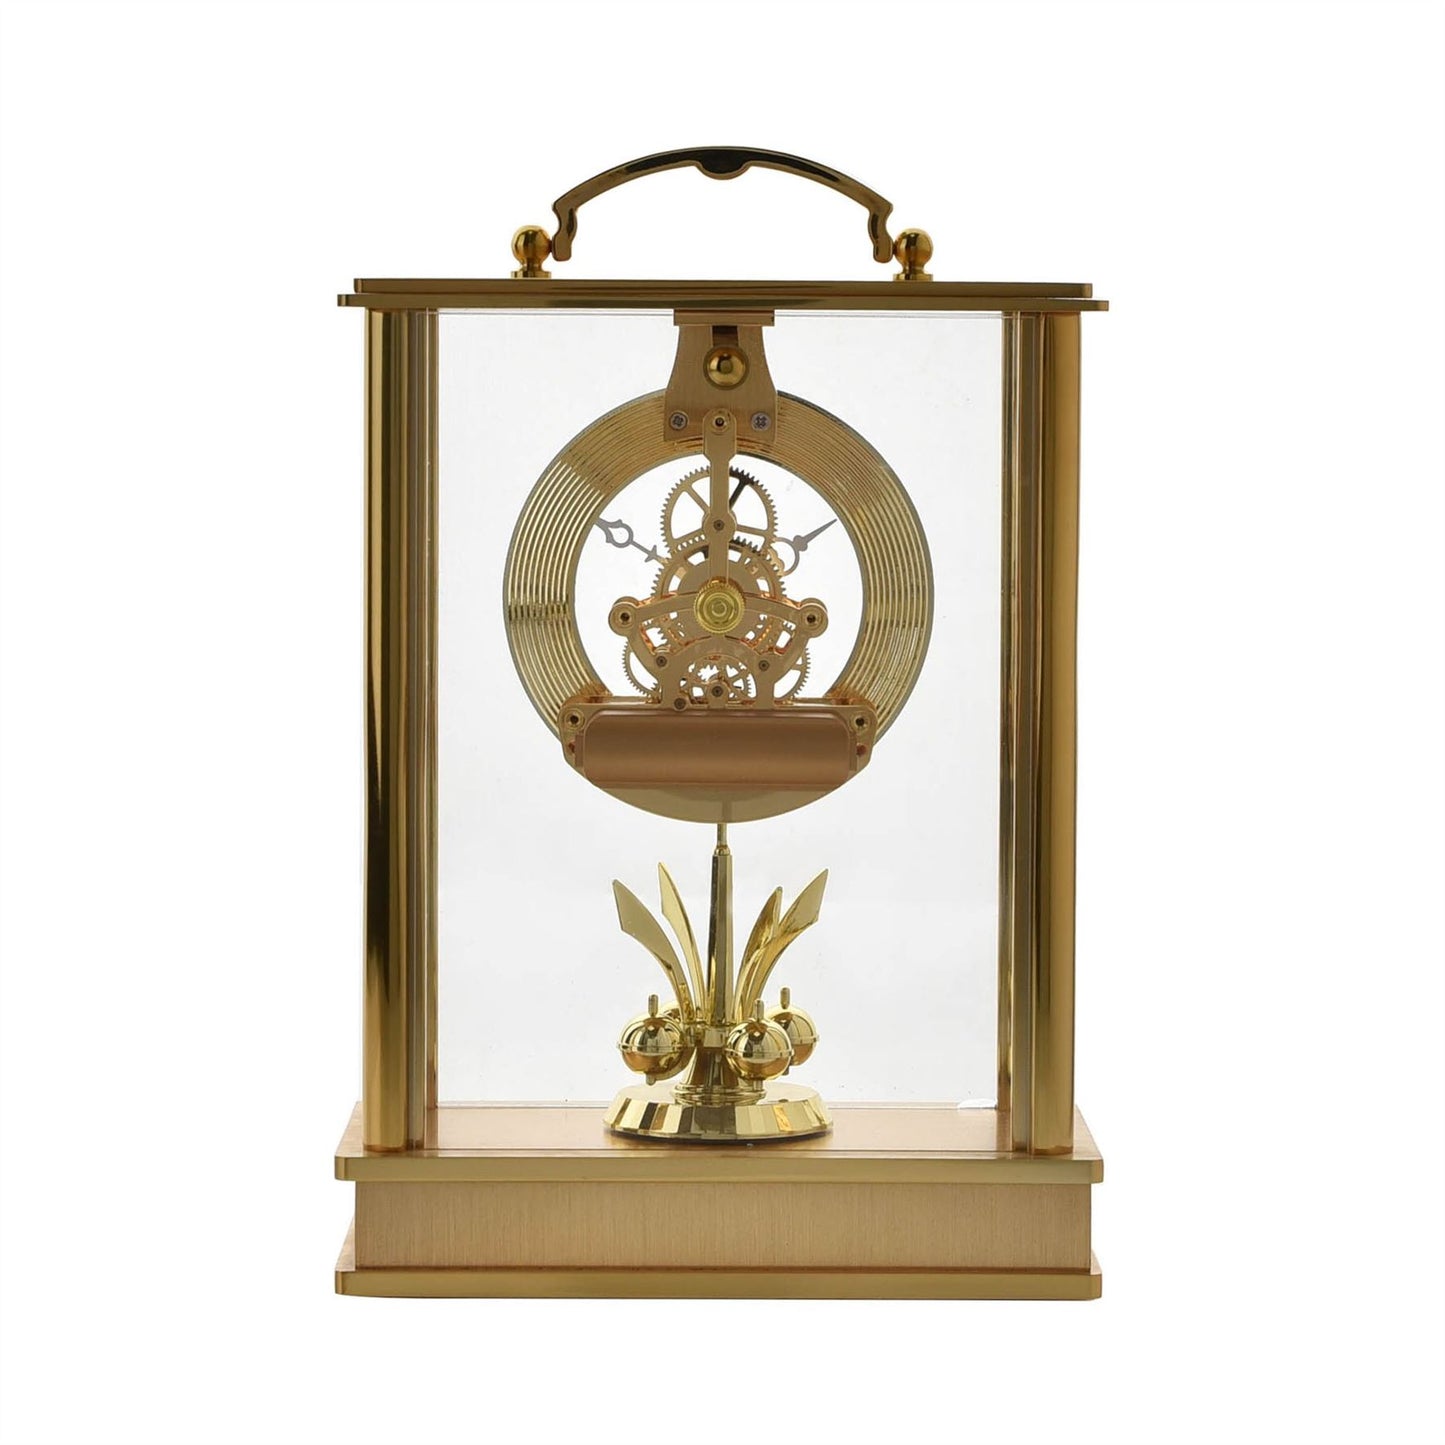 Wm.Widdop Lantern Mantel Clock Skeleton/Rotating Pendulum W2013 Available Multiple Colour